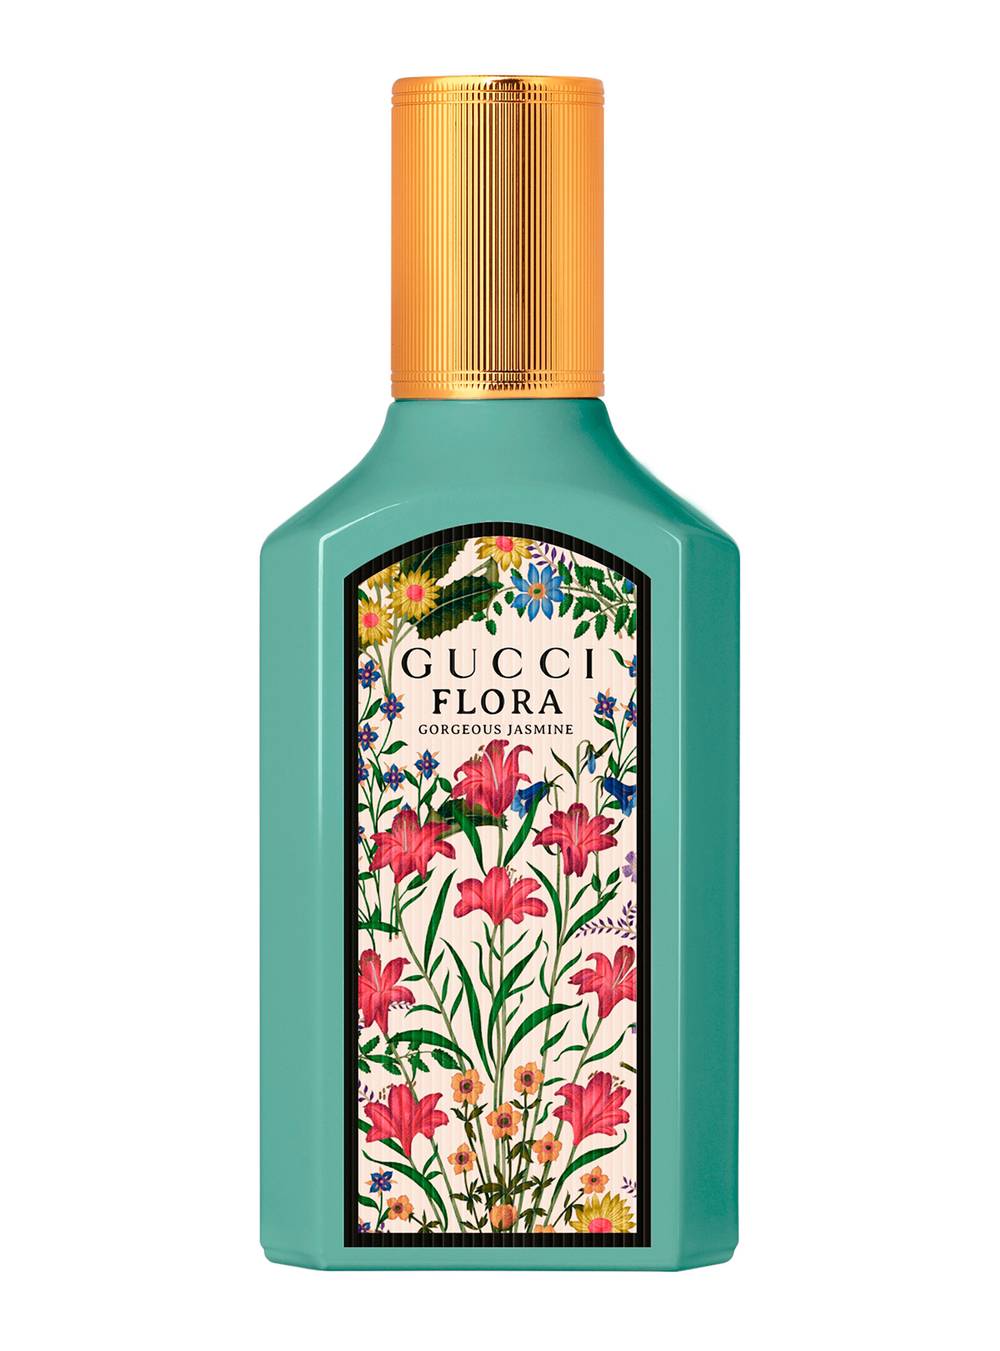 Gucci perfume flora gentle jasmine edp (botella 50 ml)